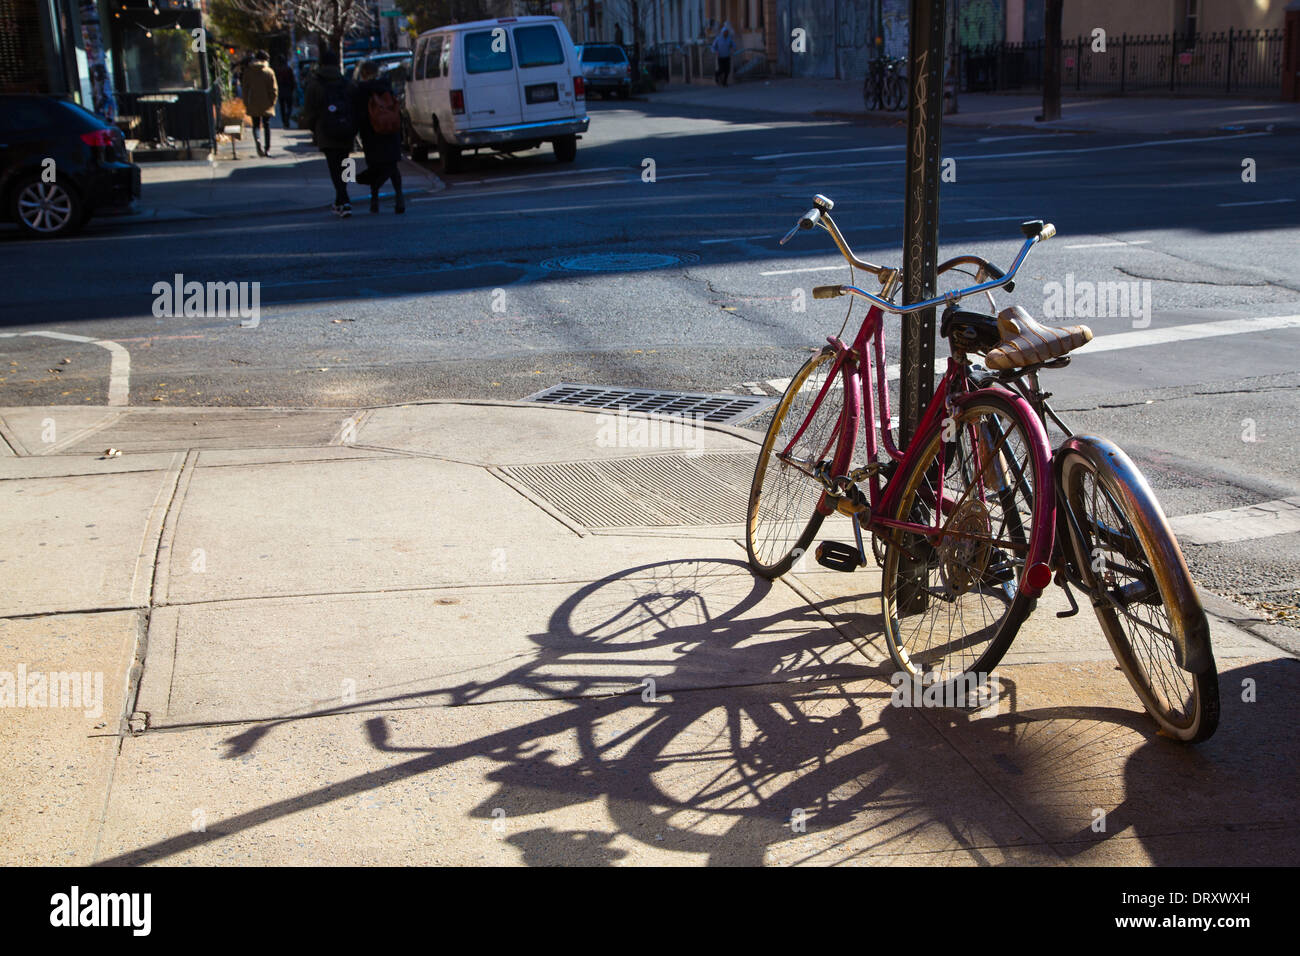 Two Bikes chained up, Williamsburg, Brooklyn, NYC, USA Stock Photo